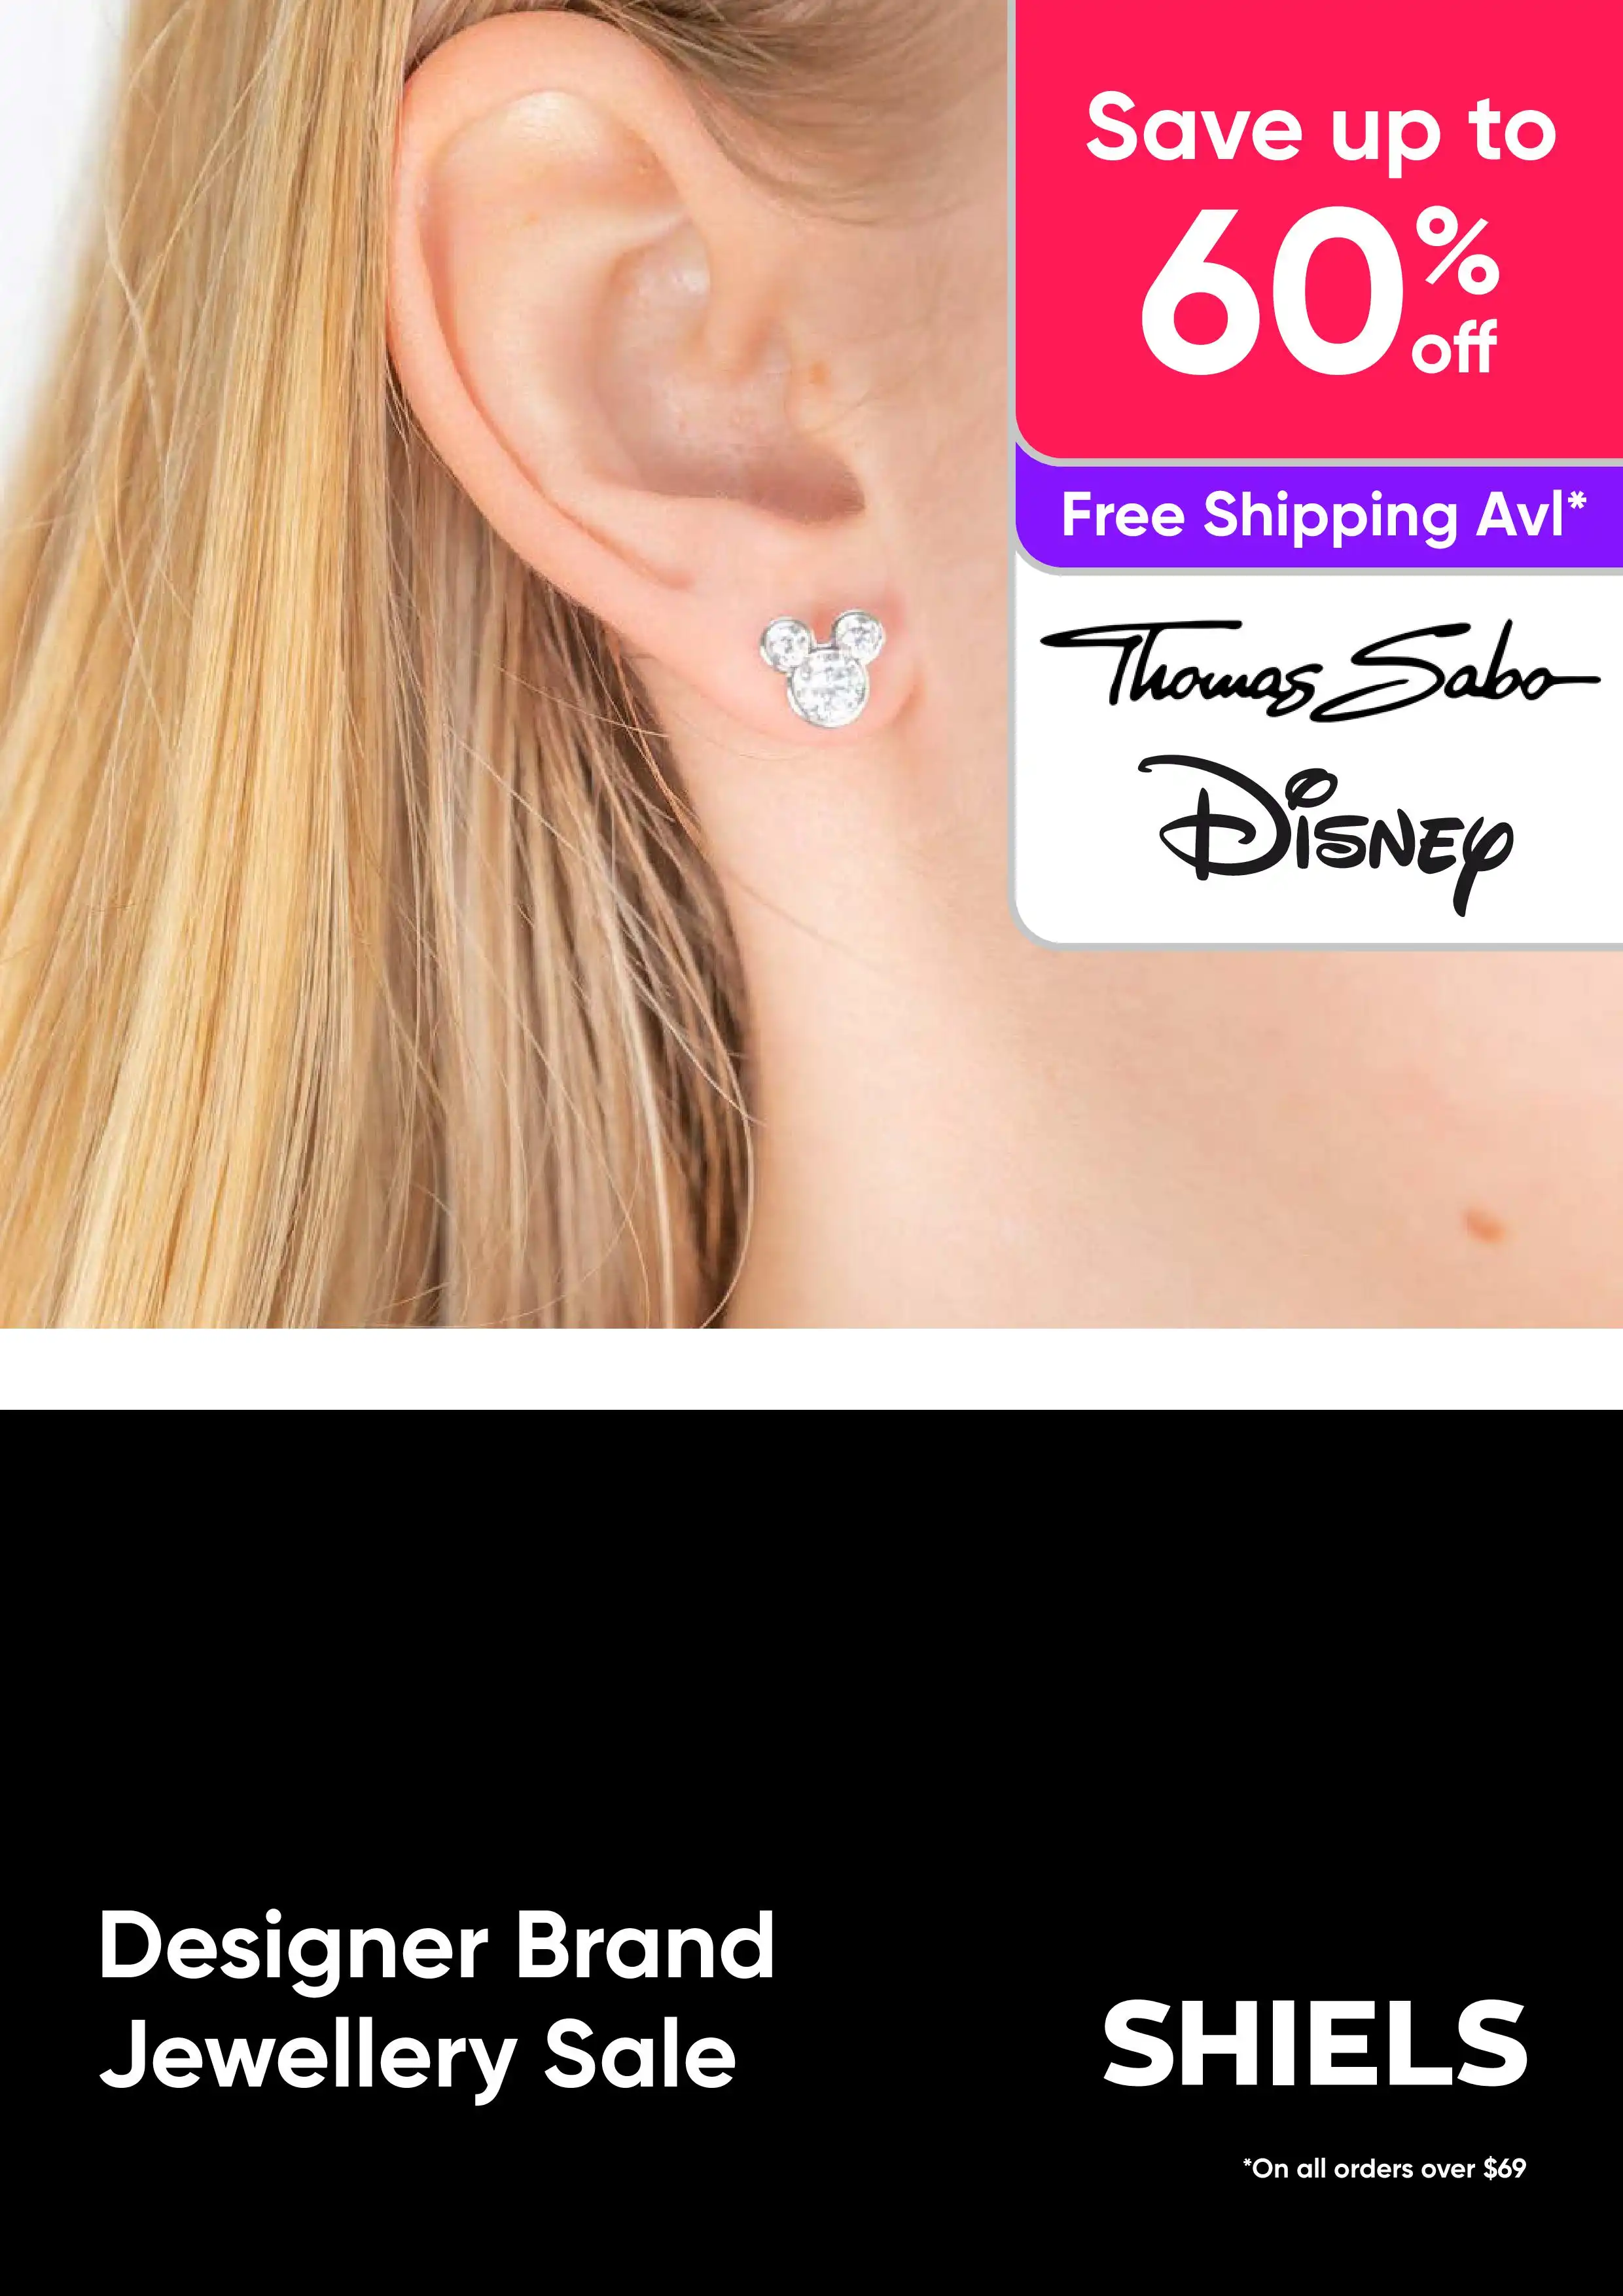 Designer Brand Jewellery - Thomas Sabo, Disney - Up to 60% Off